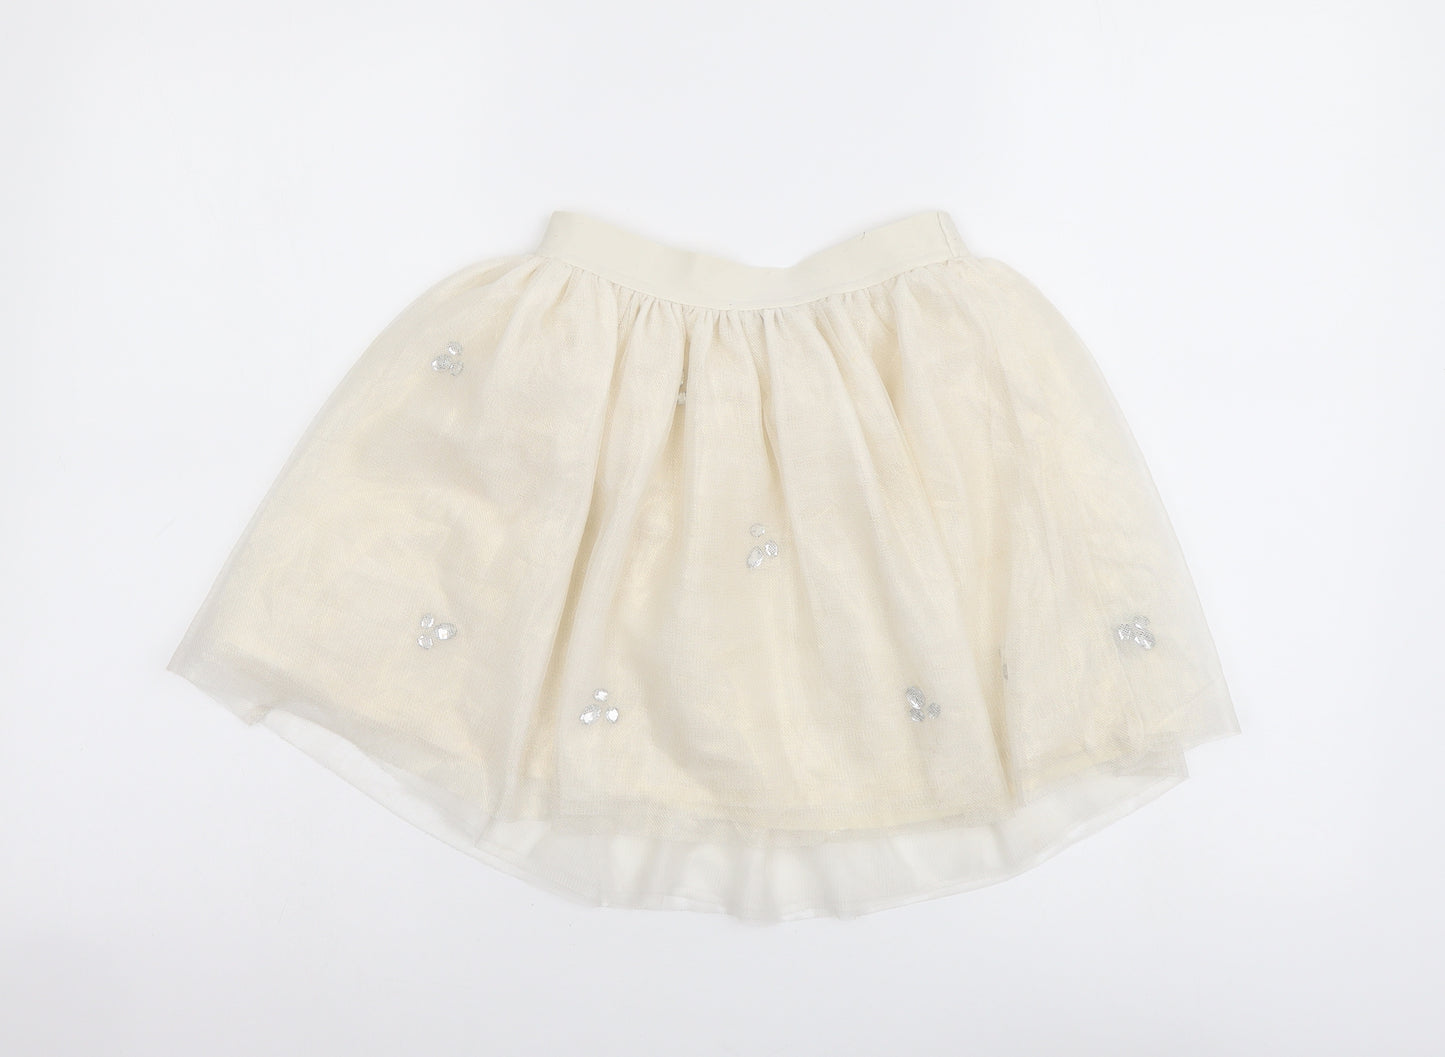 Gap Girls Ivory Polyester Tutu Skirt Size 6-7 Years Regular